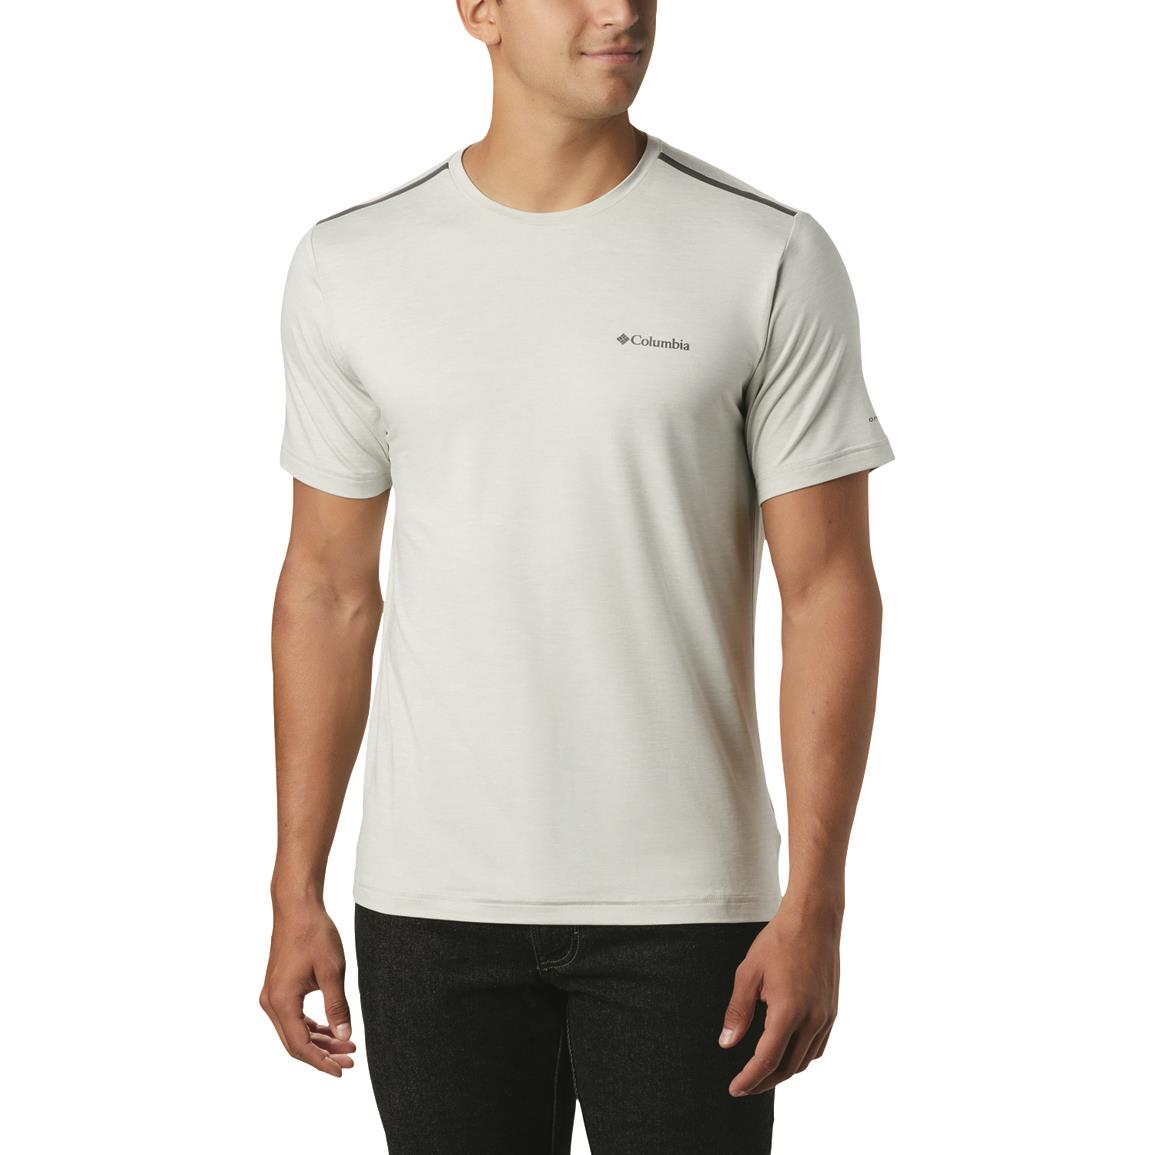 Columbia Men's Tech Trail Shirt, Cool Gray